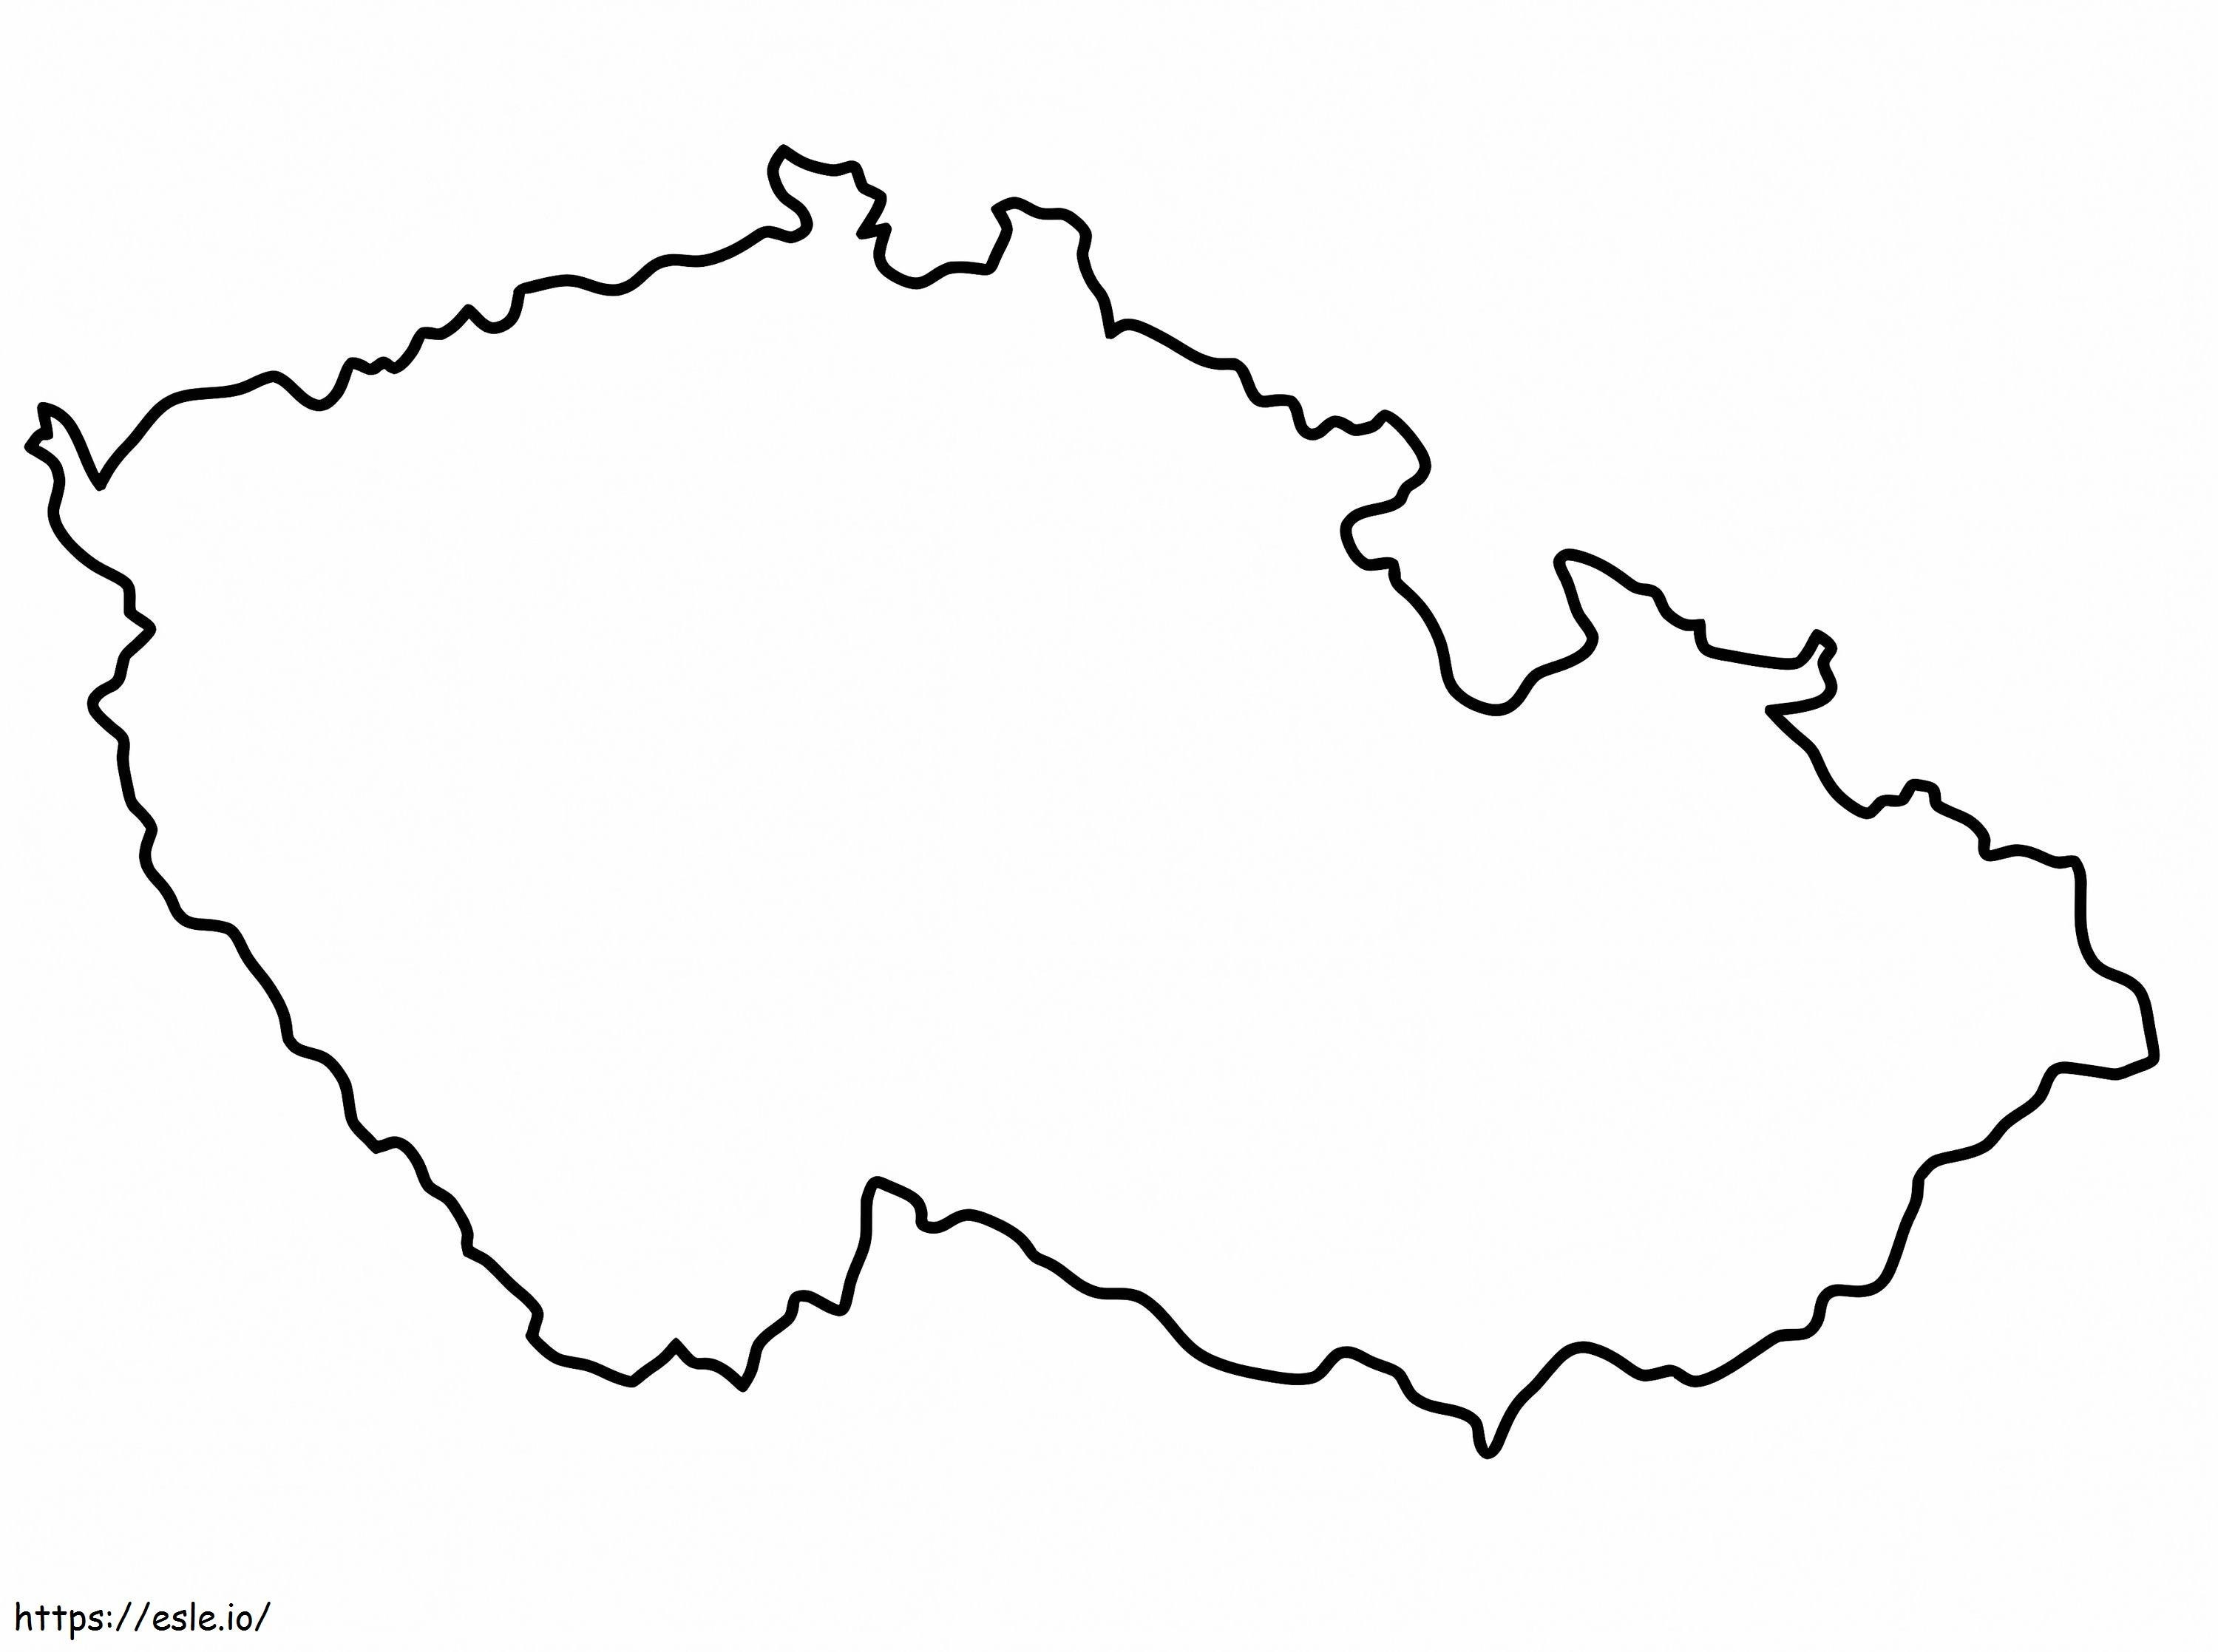 Çek Cumhuriyeti Anahat Haritası boyama